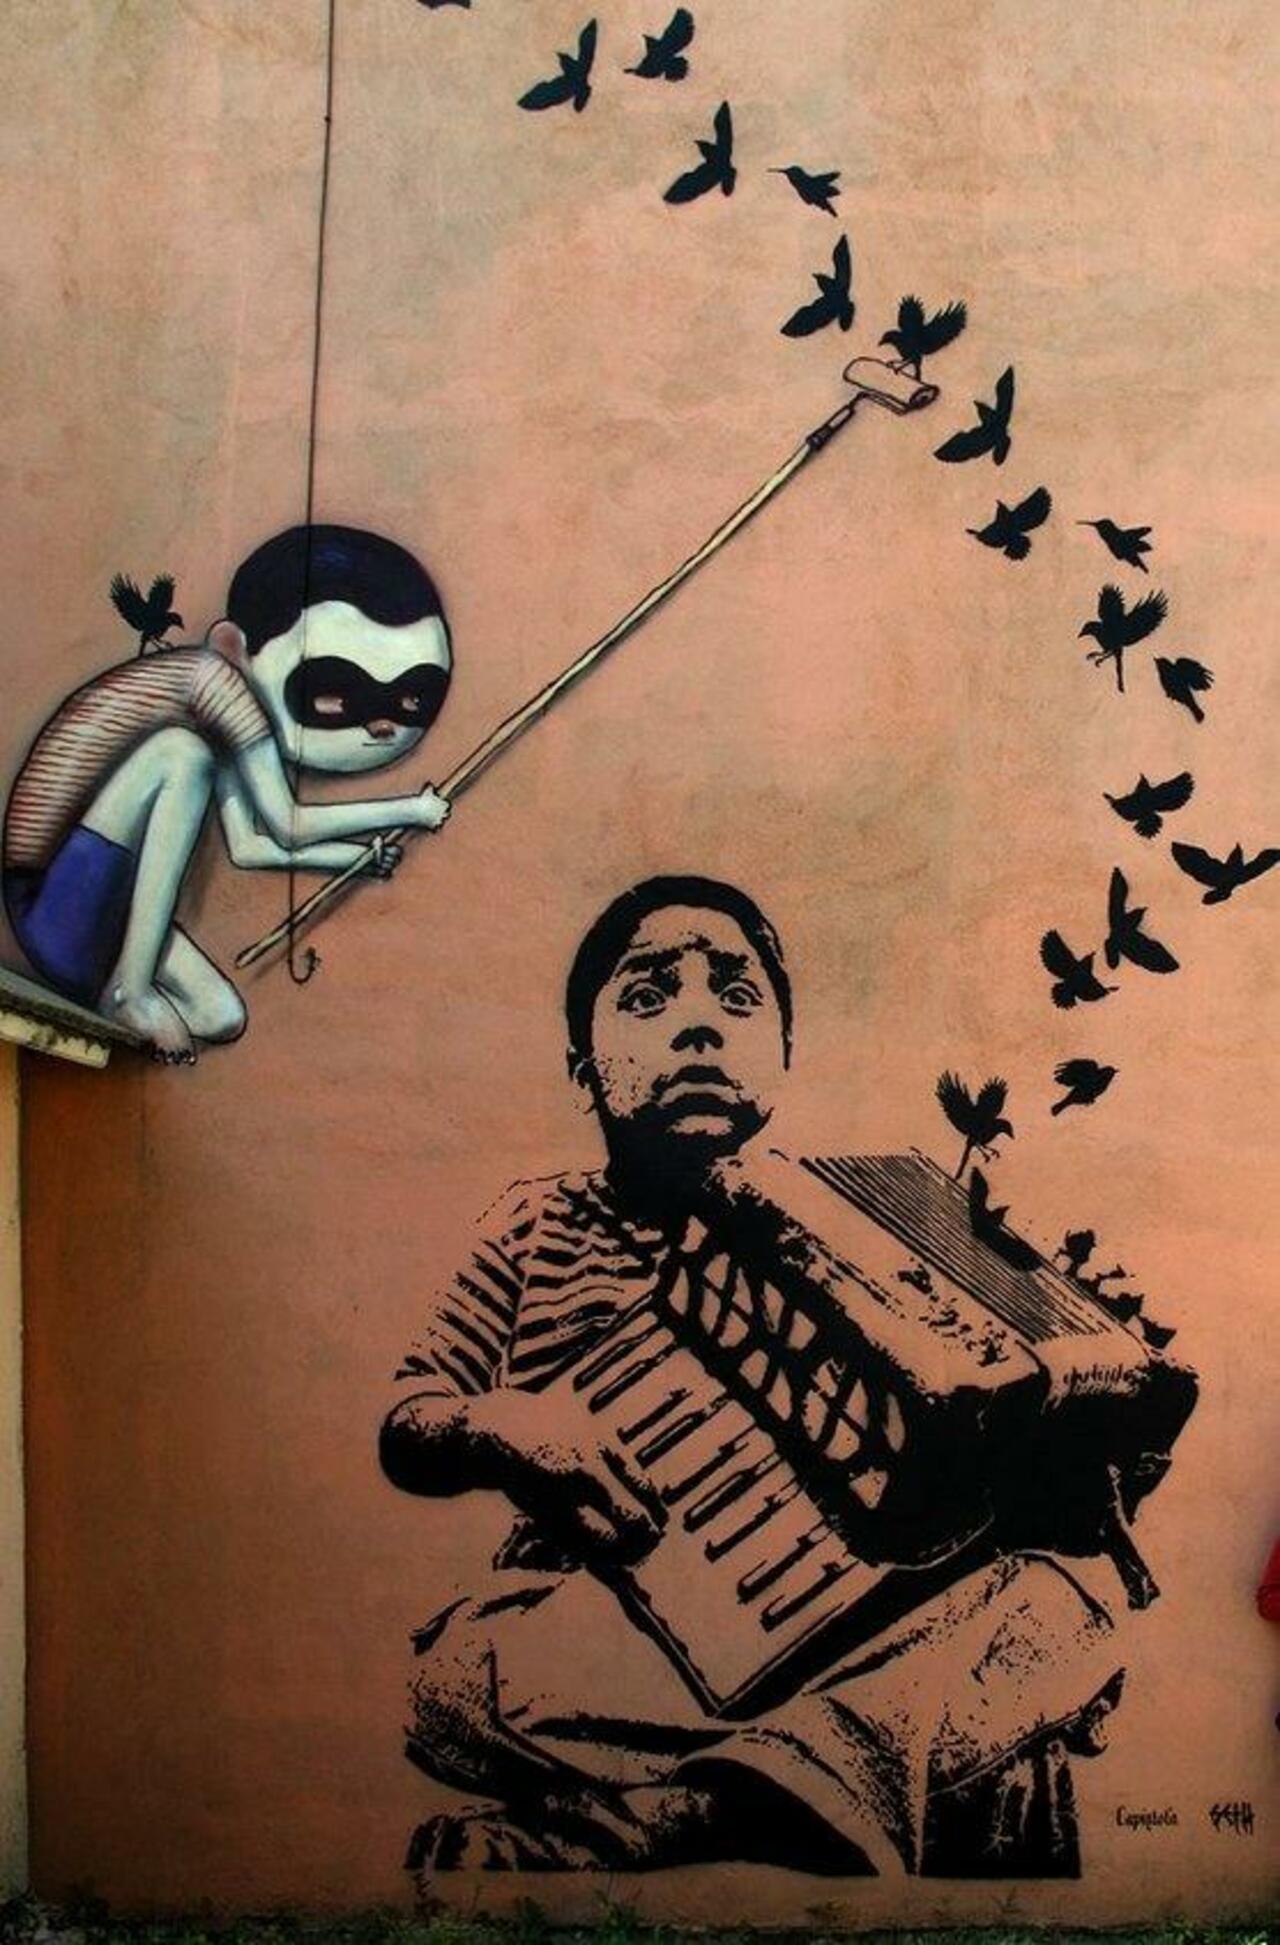 “@hypatia373: #art #streetart #graffiti 
by #Seth http://t.co/ucDJ2MFuty”